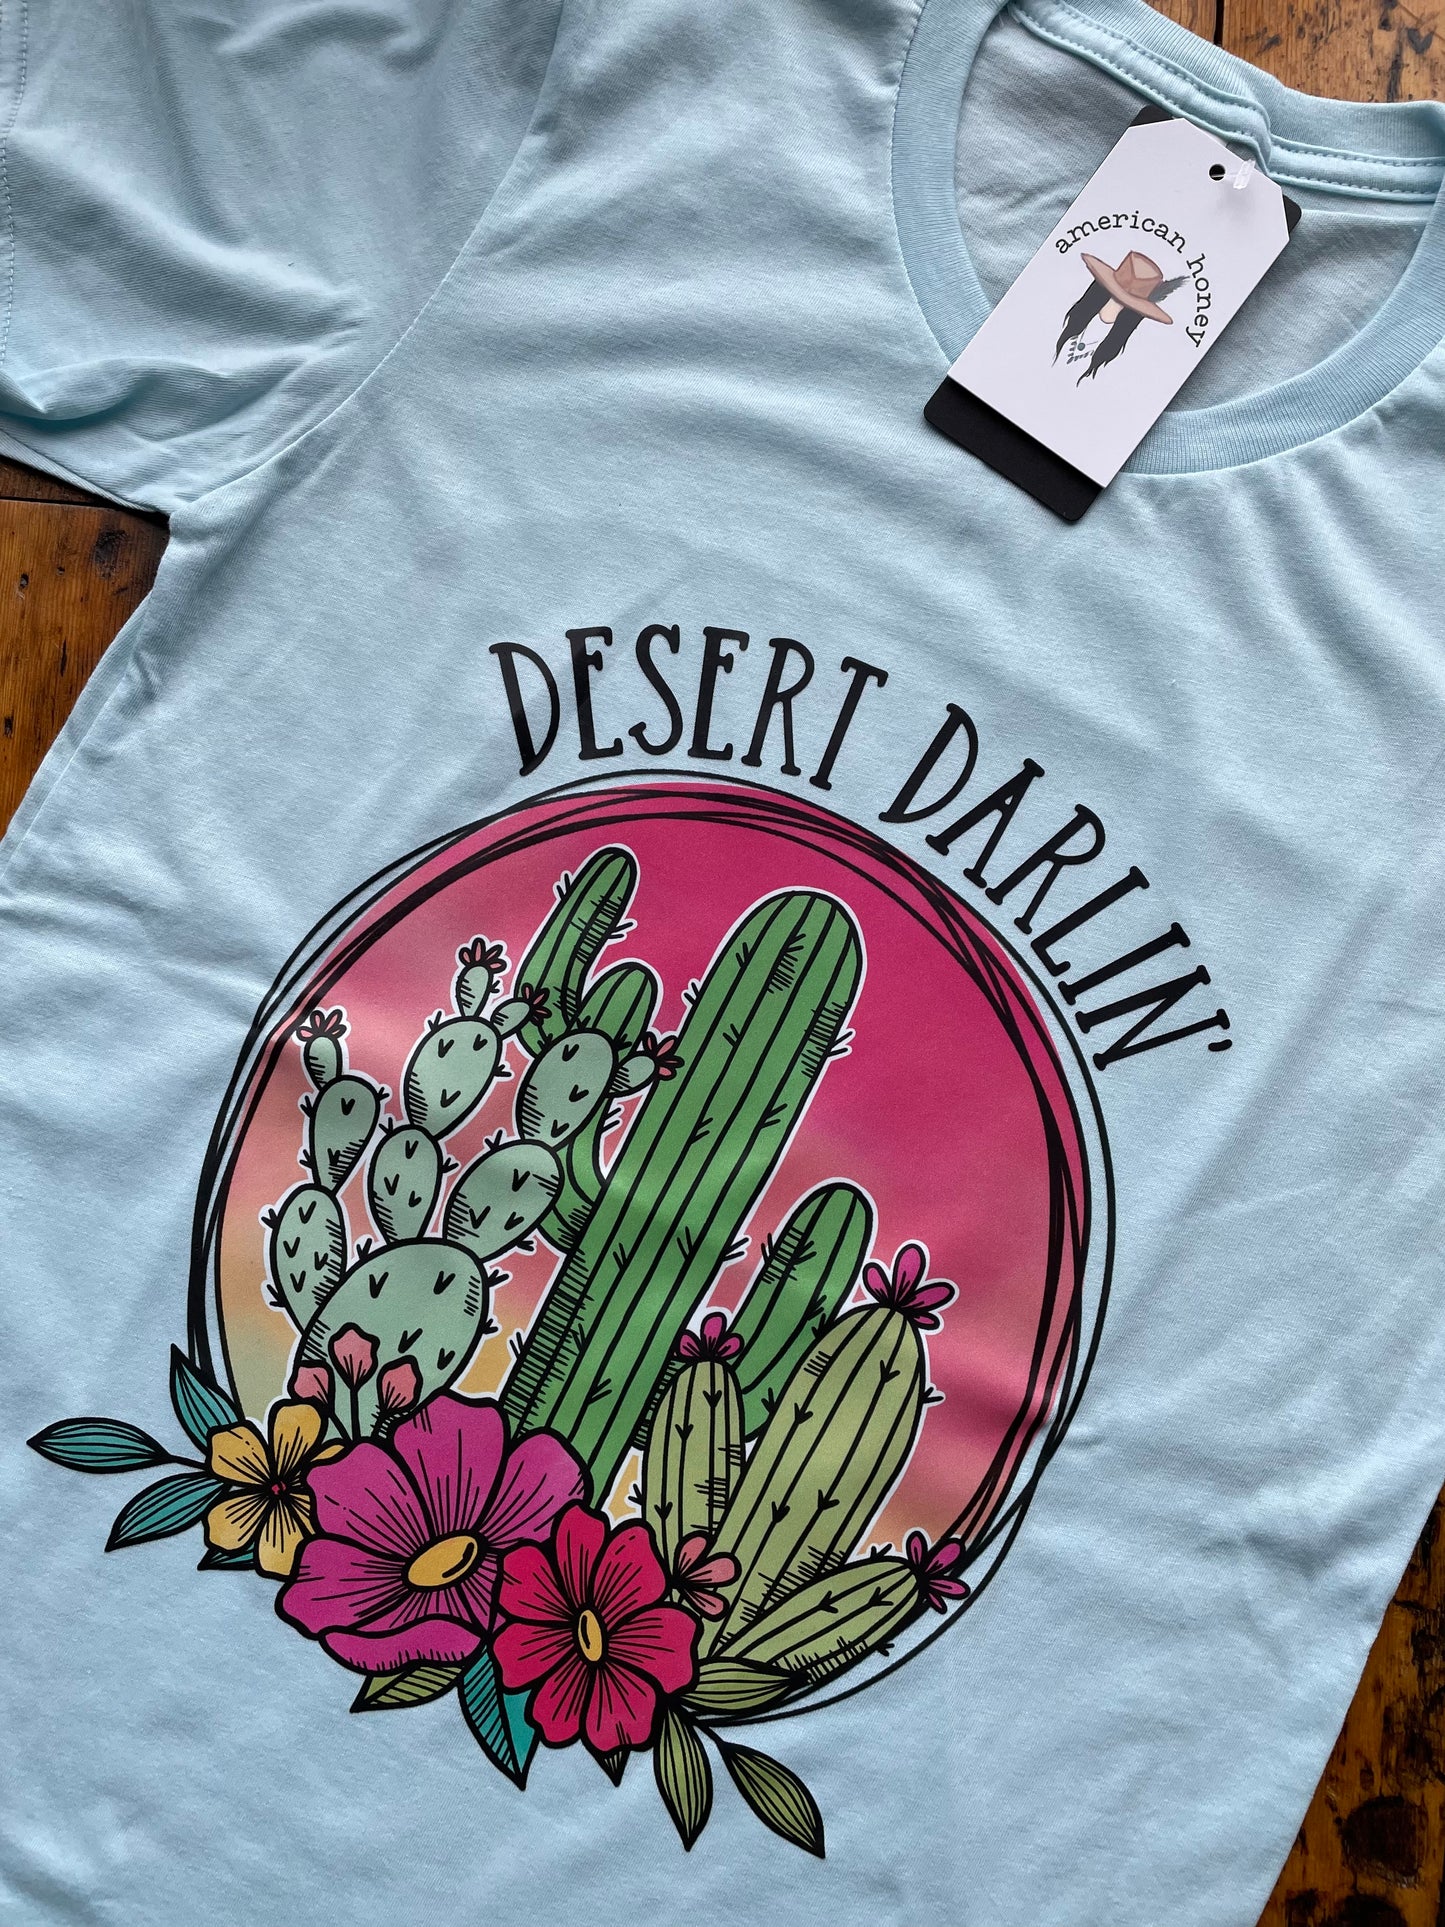 Desert Darlin'